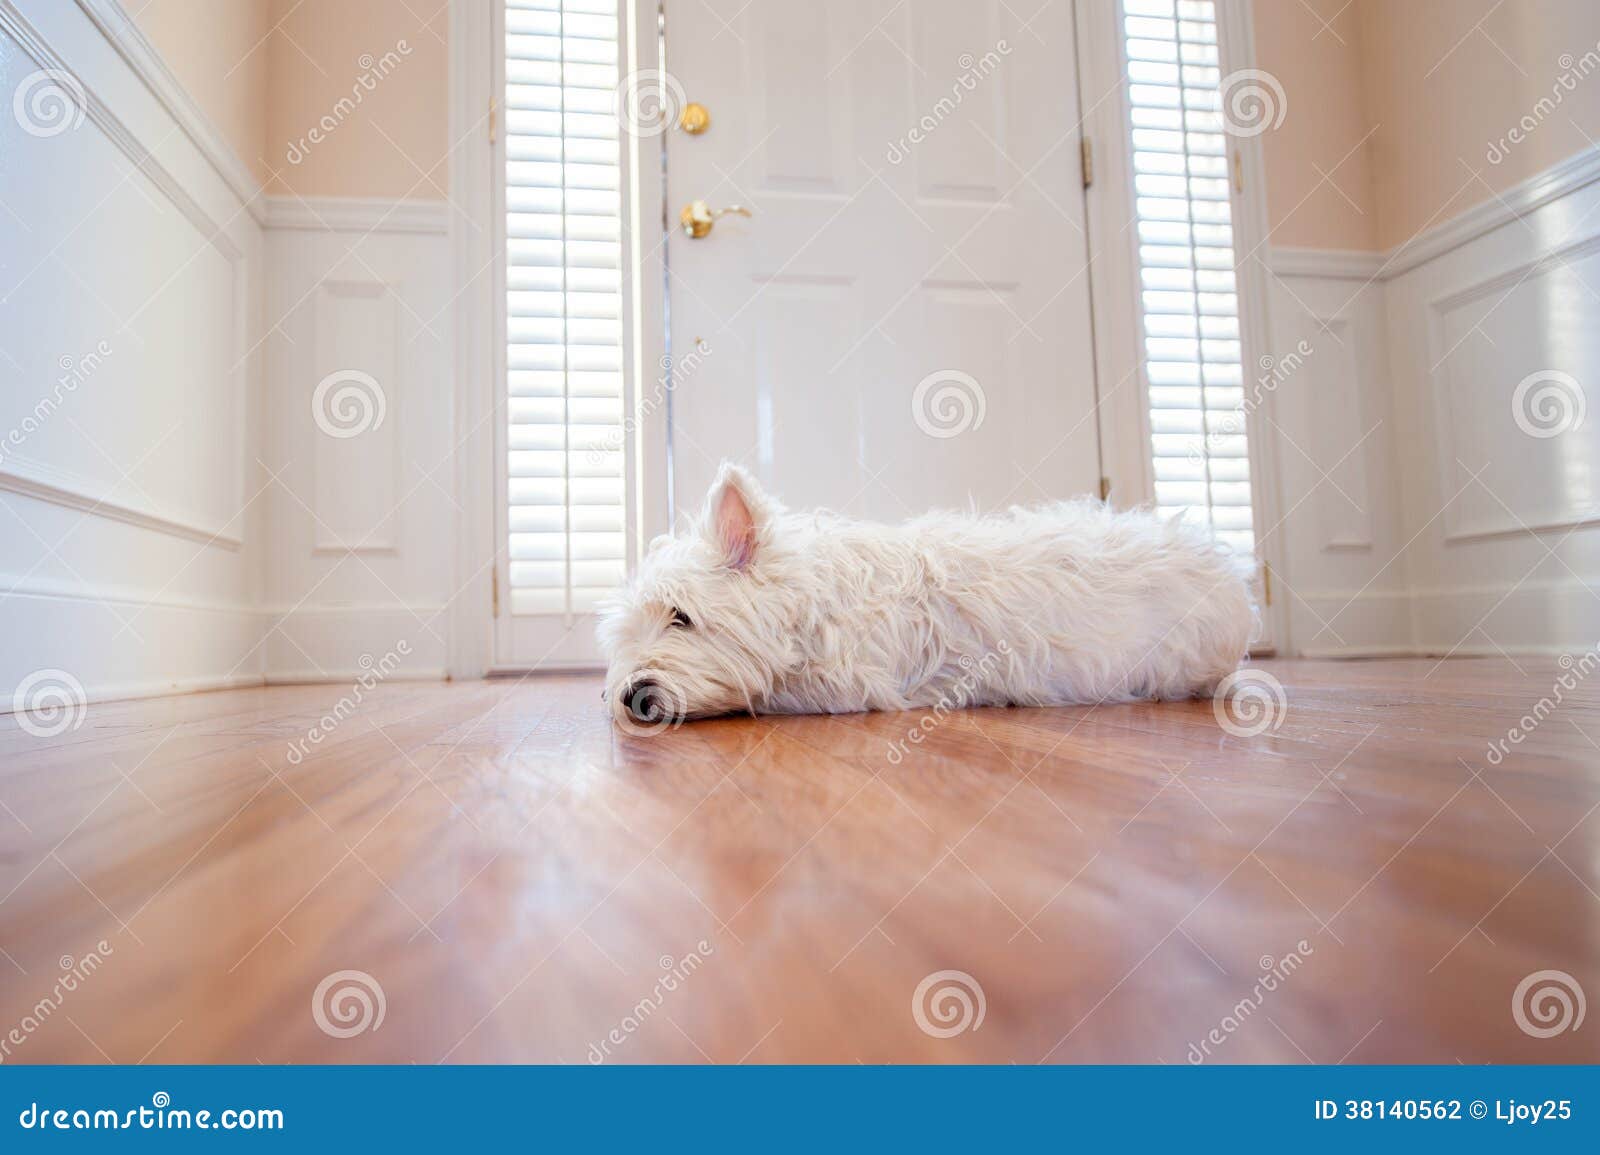 Dog waiting at the door stock photo. Image of greeting - 38140562